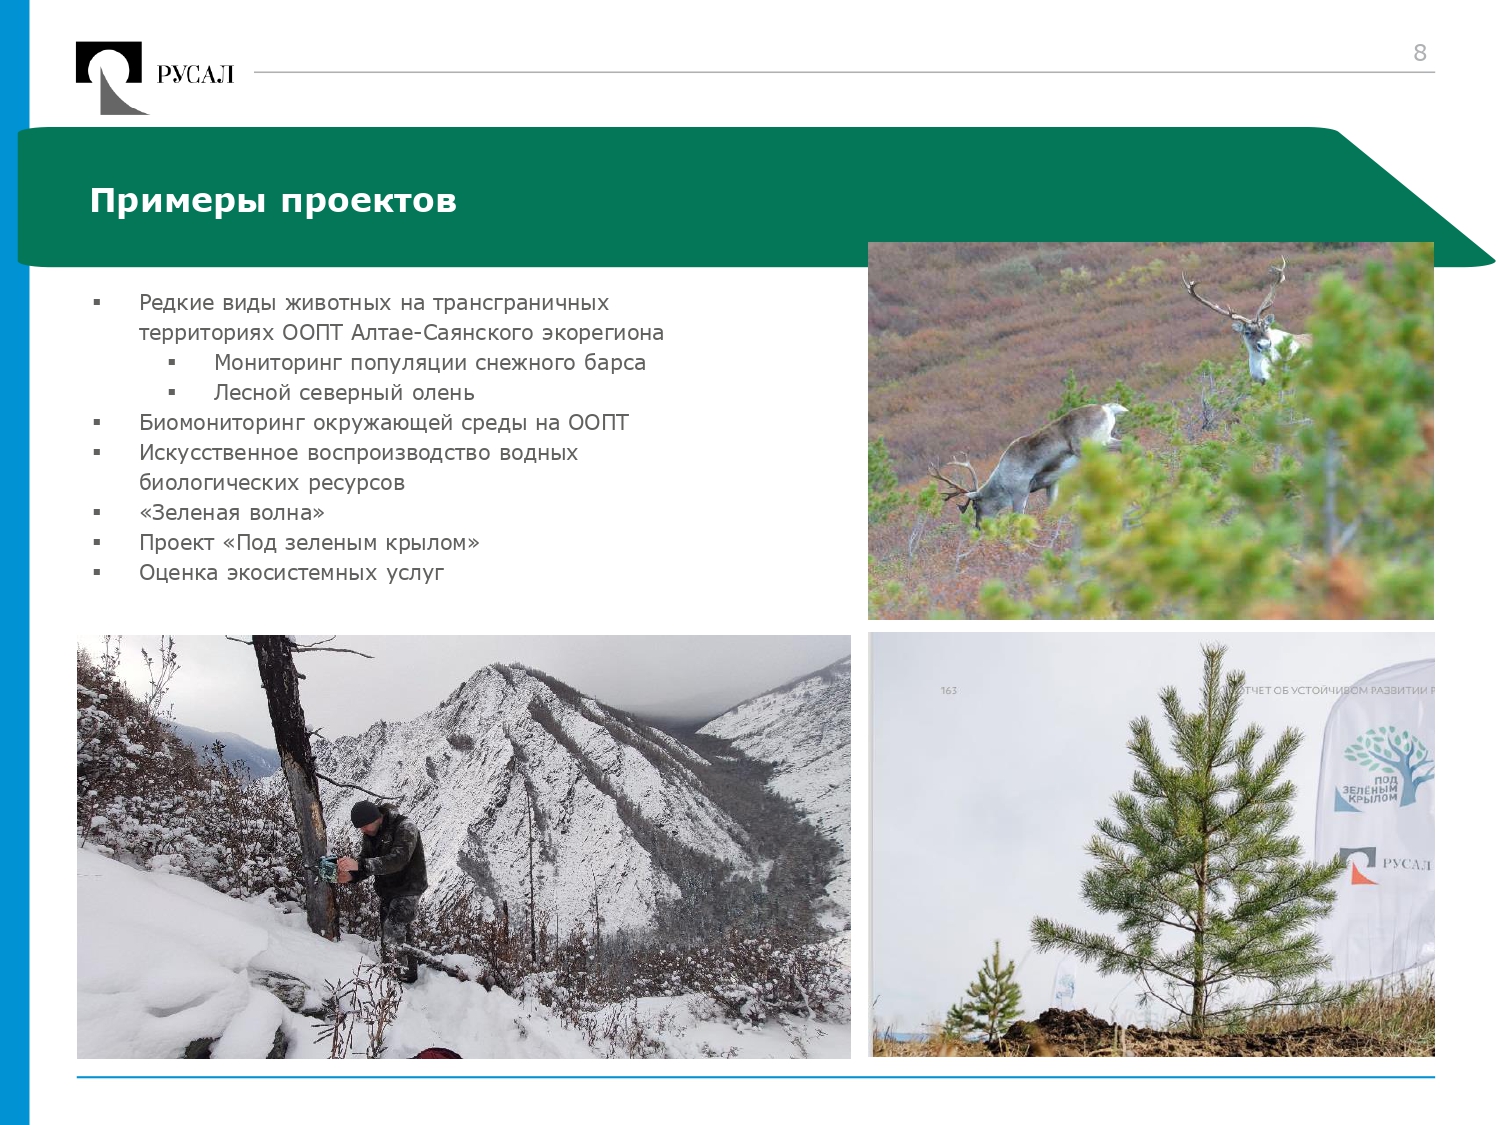 RUSAL Biodiversity 20220217-blue-green var6_page-0008